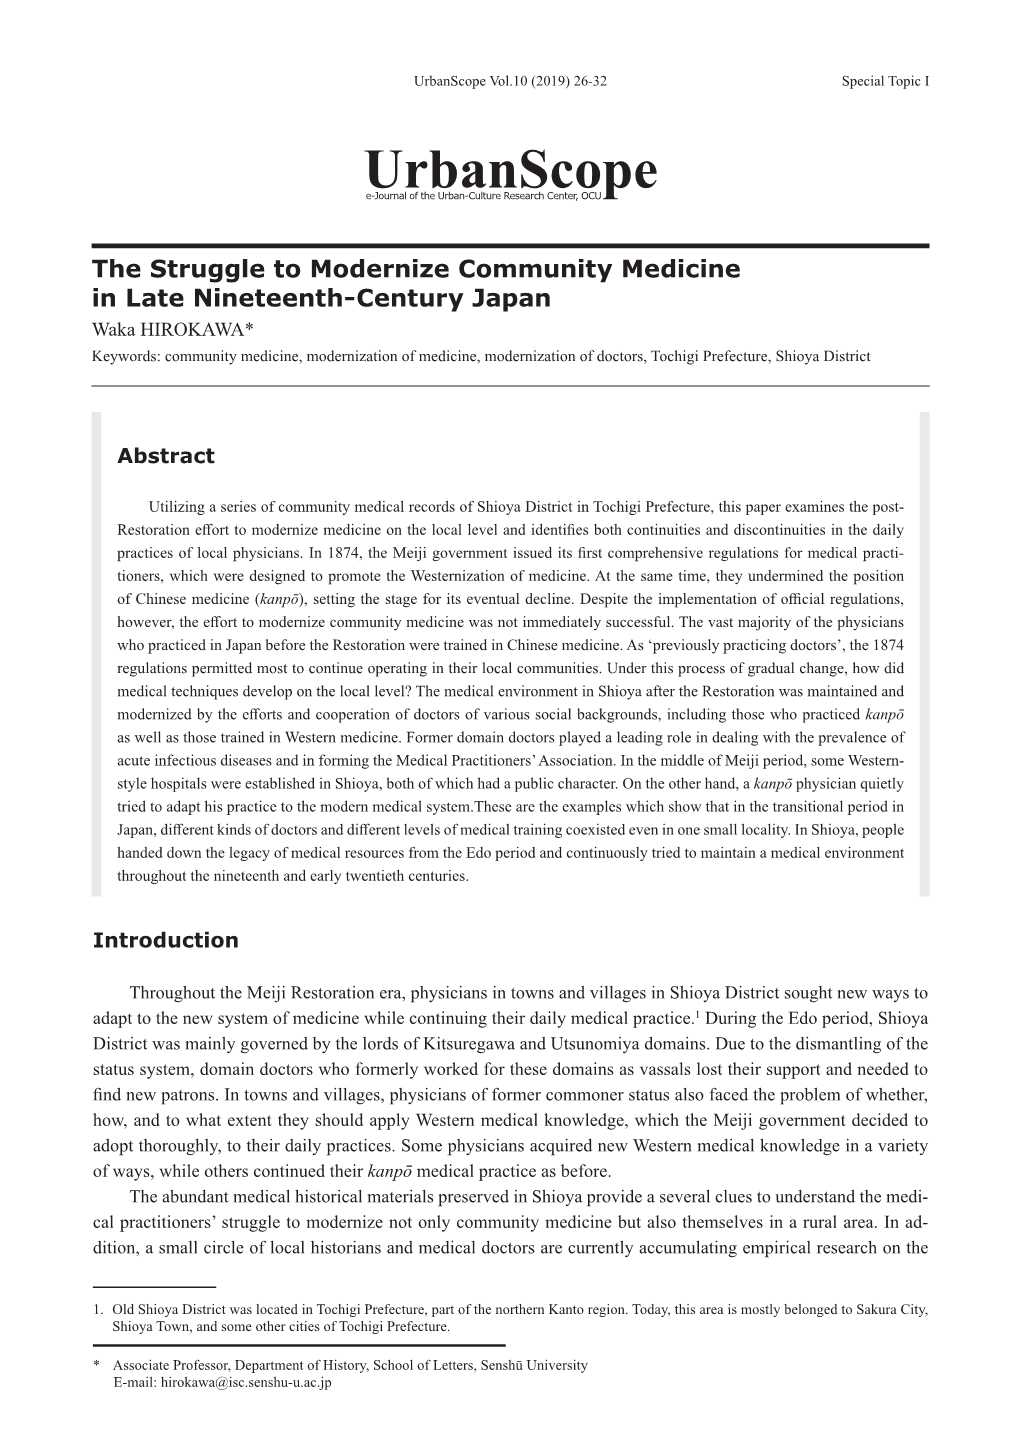 The Struggle to Modernize Community Medicine in Late Nineteenth